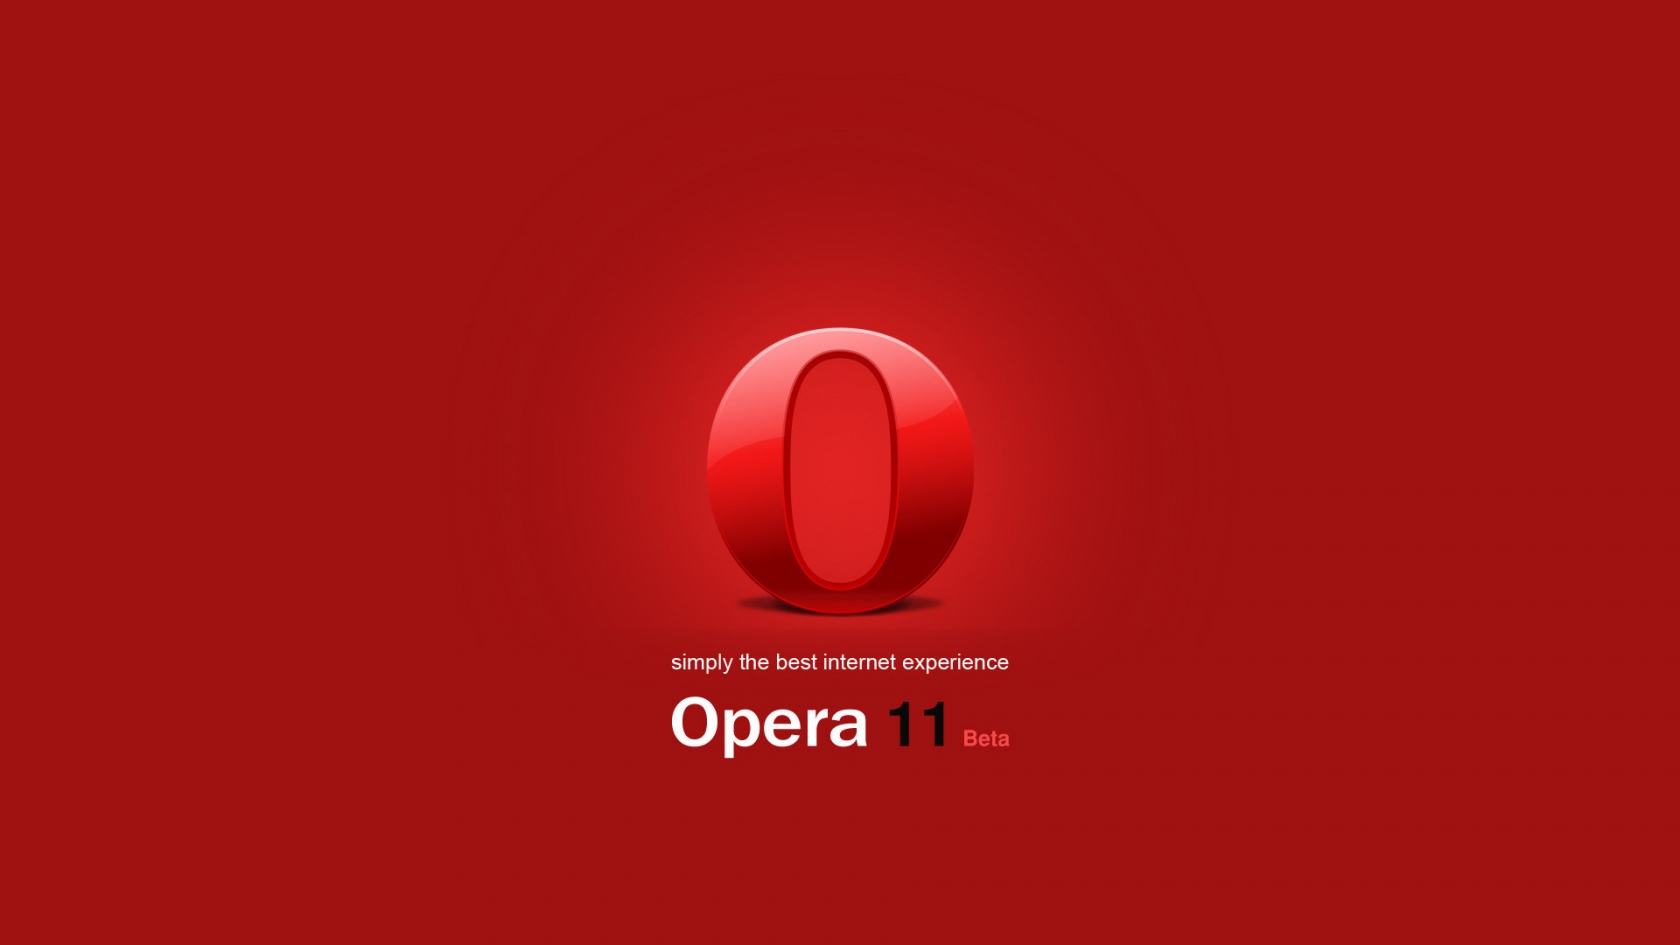 Opera 11 Beta for 1680 x 945 HDTV resolution